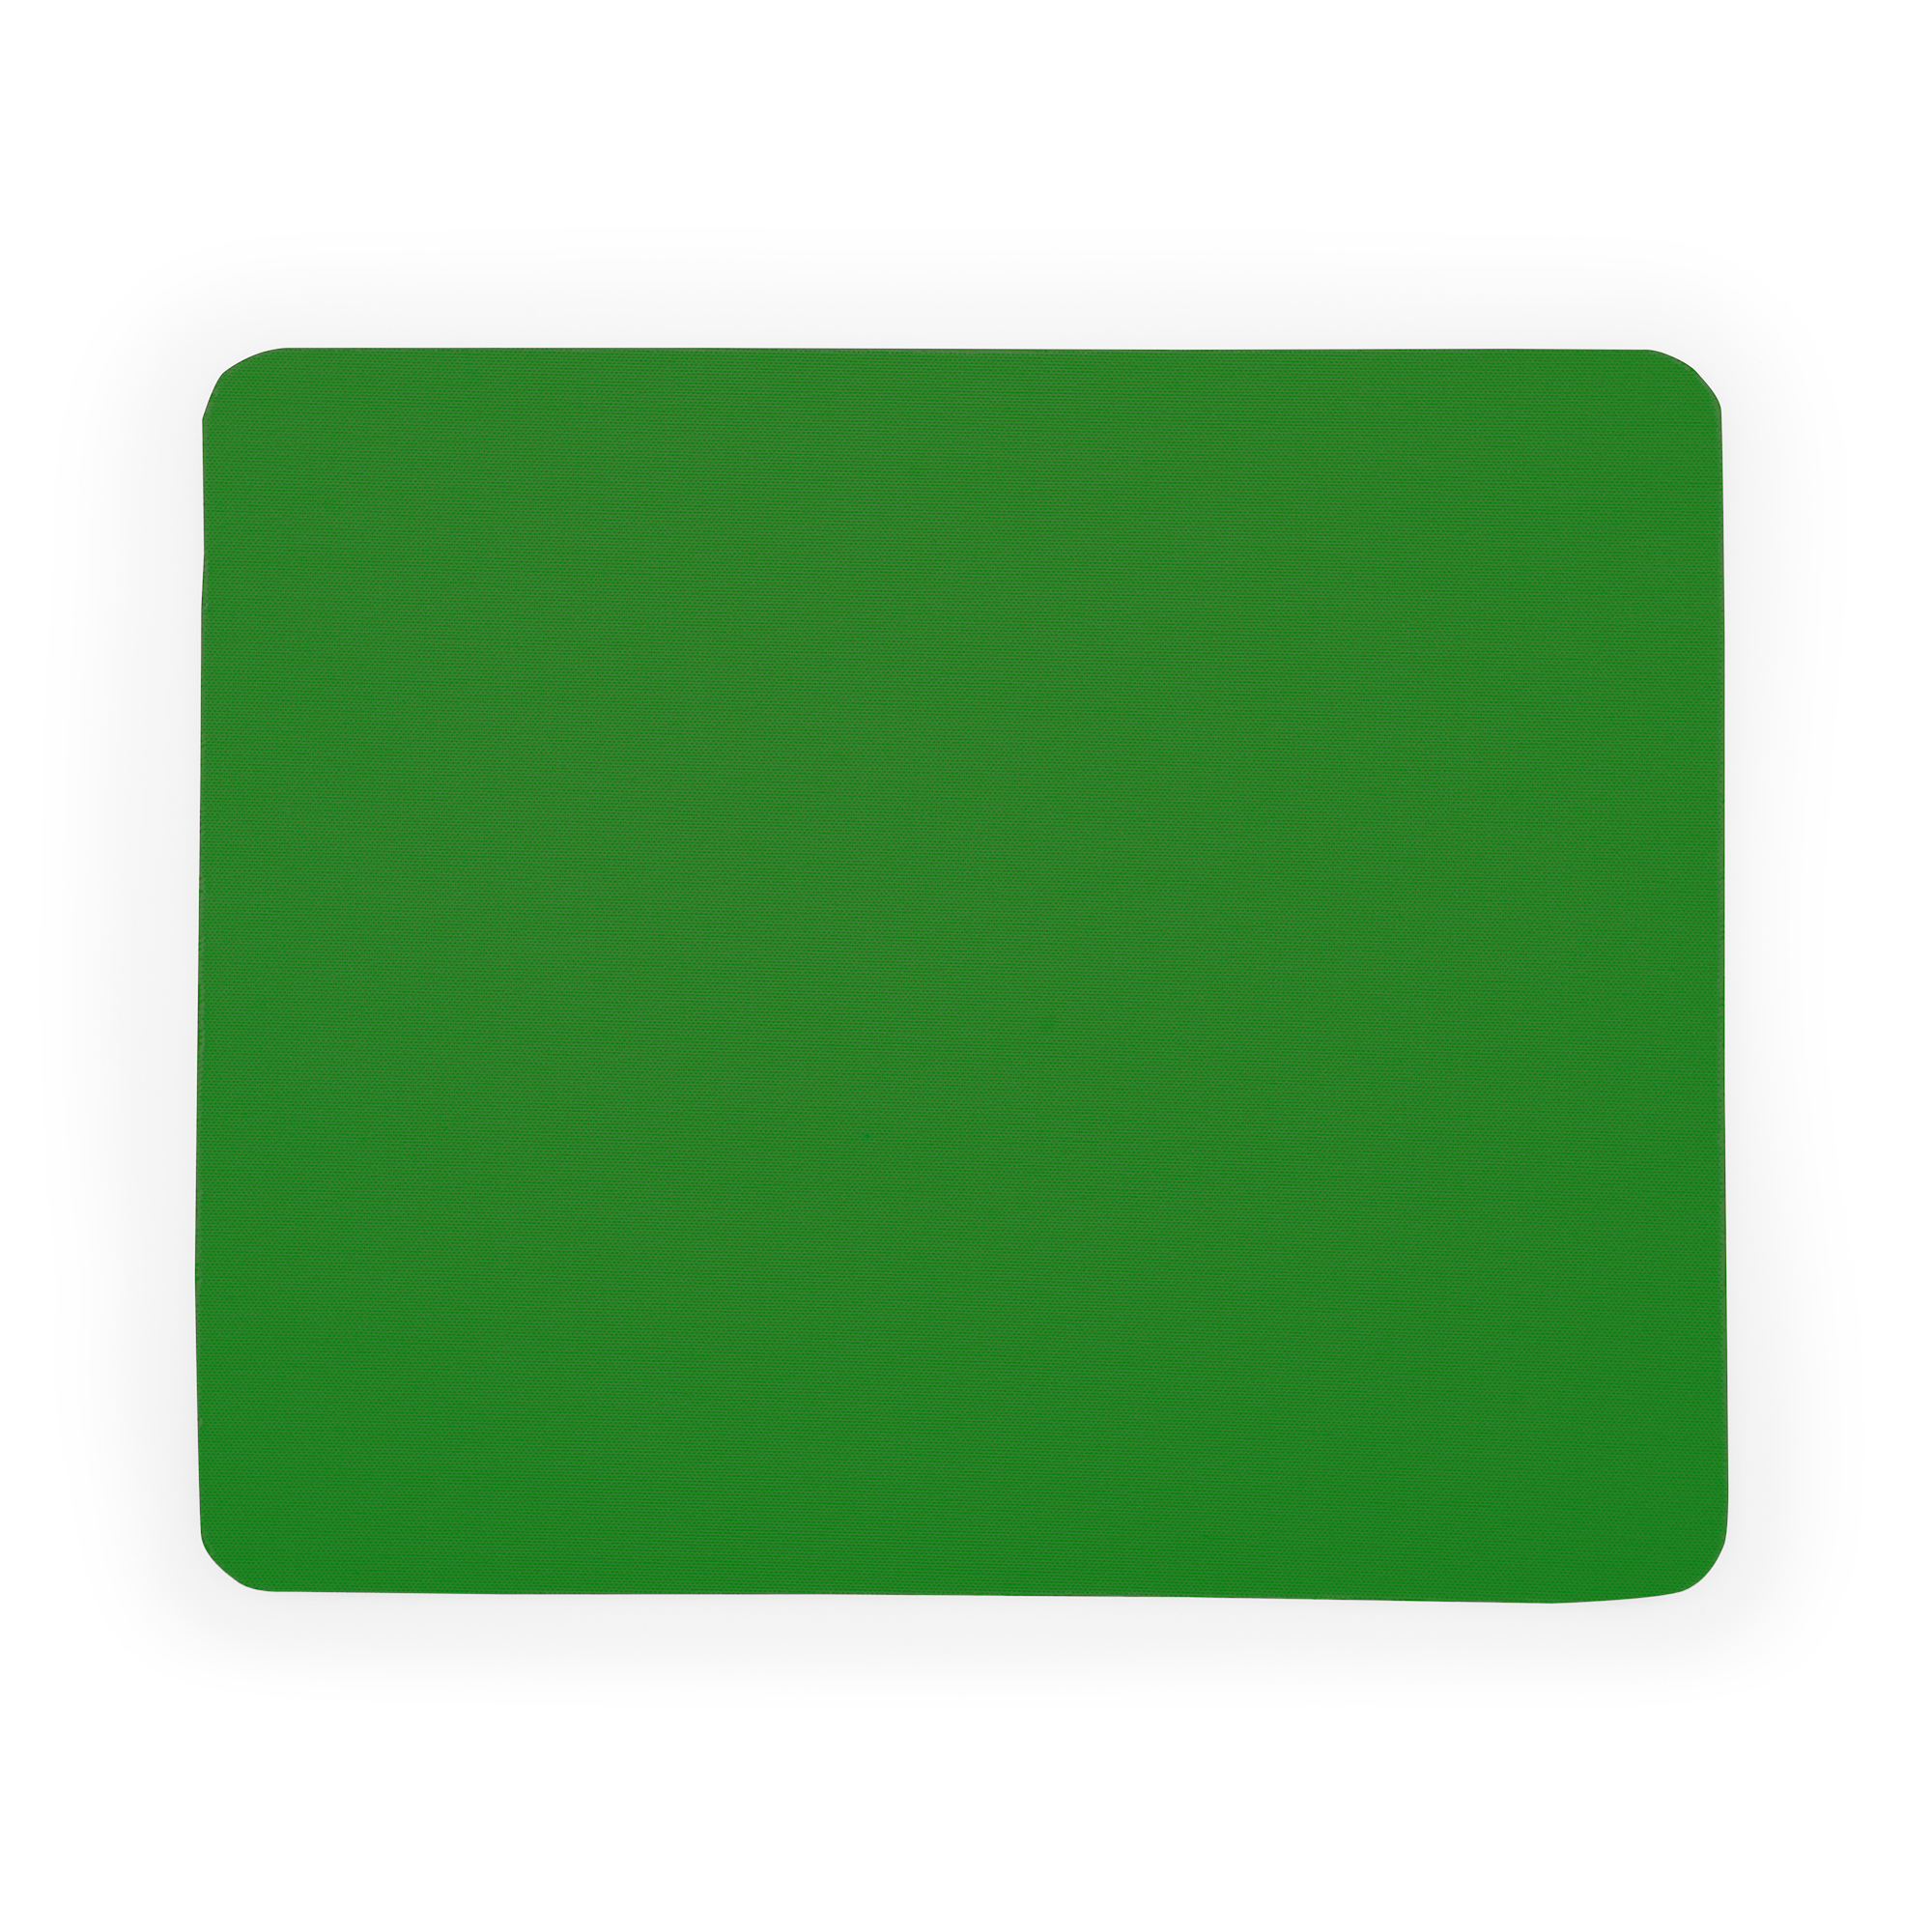 2575-mood-tappetino-per-mouse-verde-felce.jpg